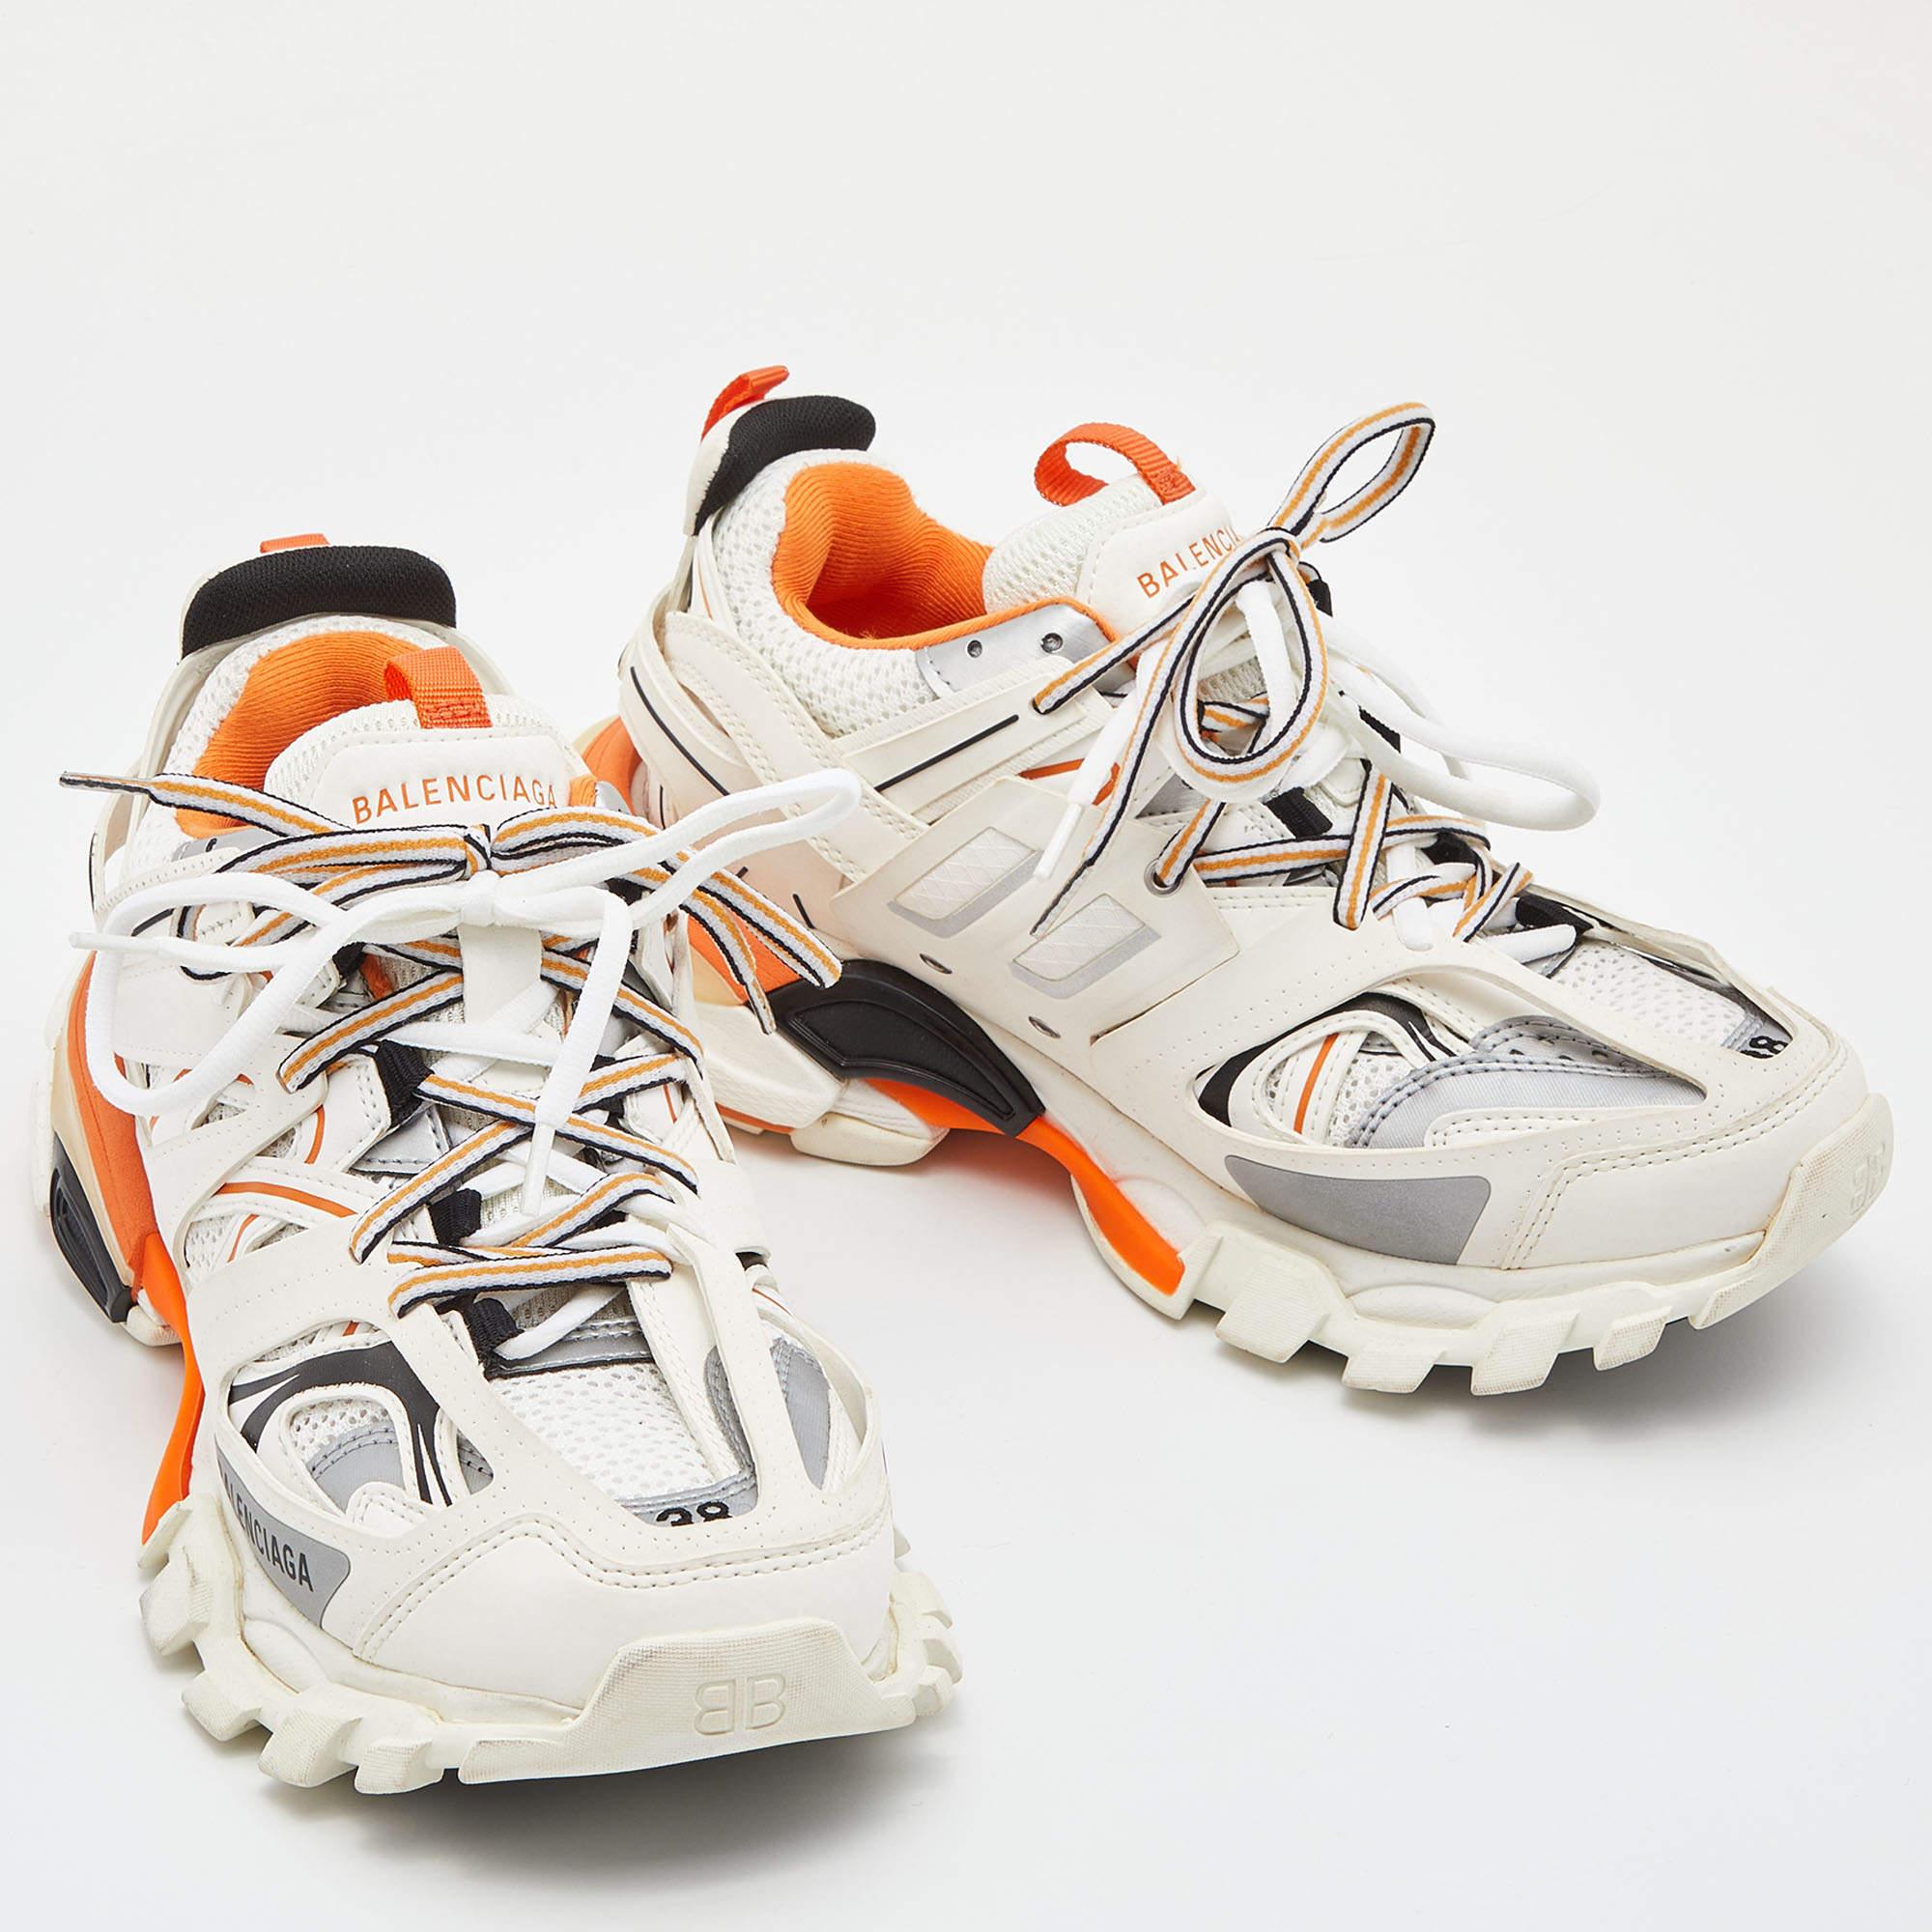 Women's Balenciaga Off White/Orange Leather and Mesh Track Sneakers Size 38